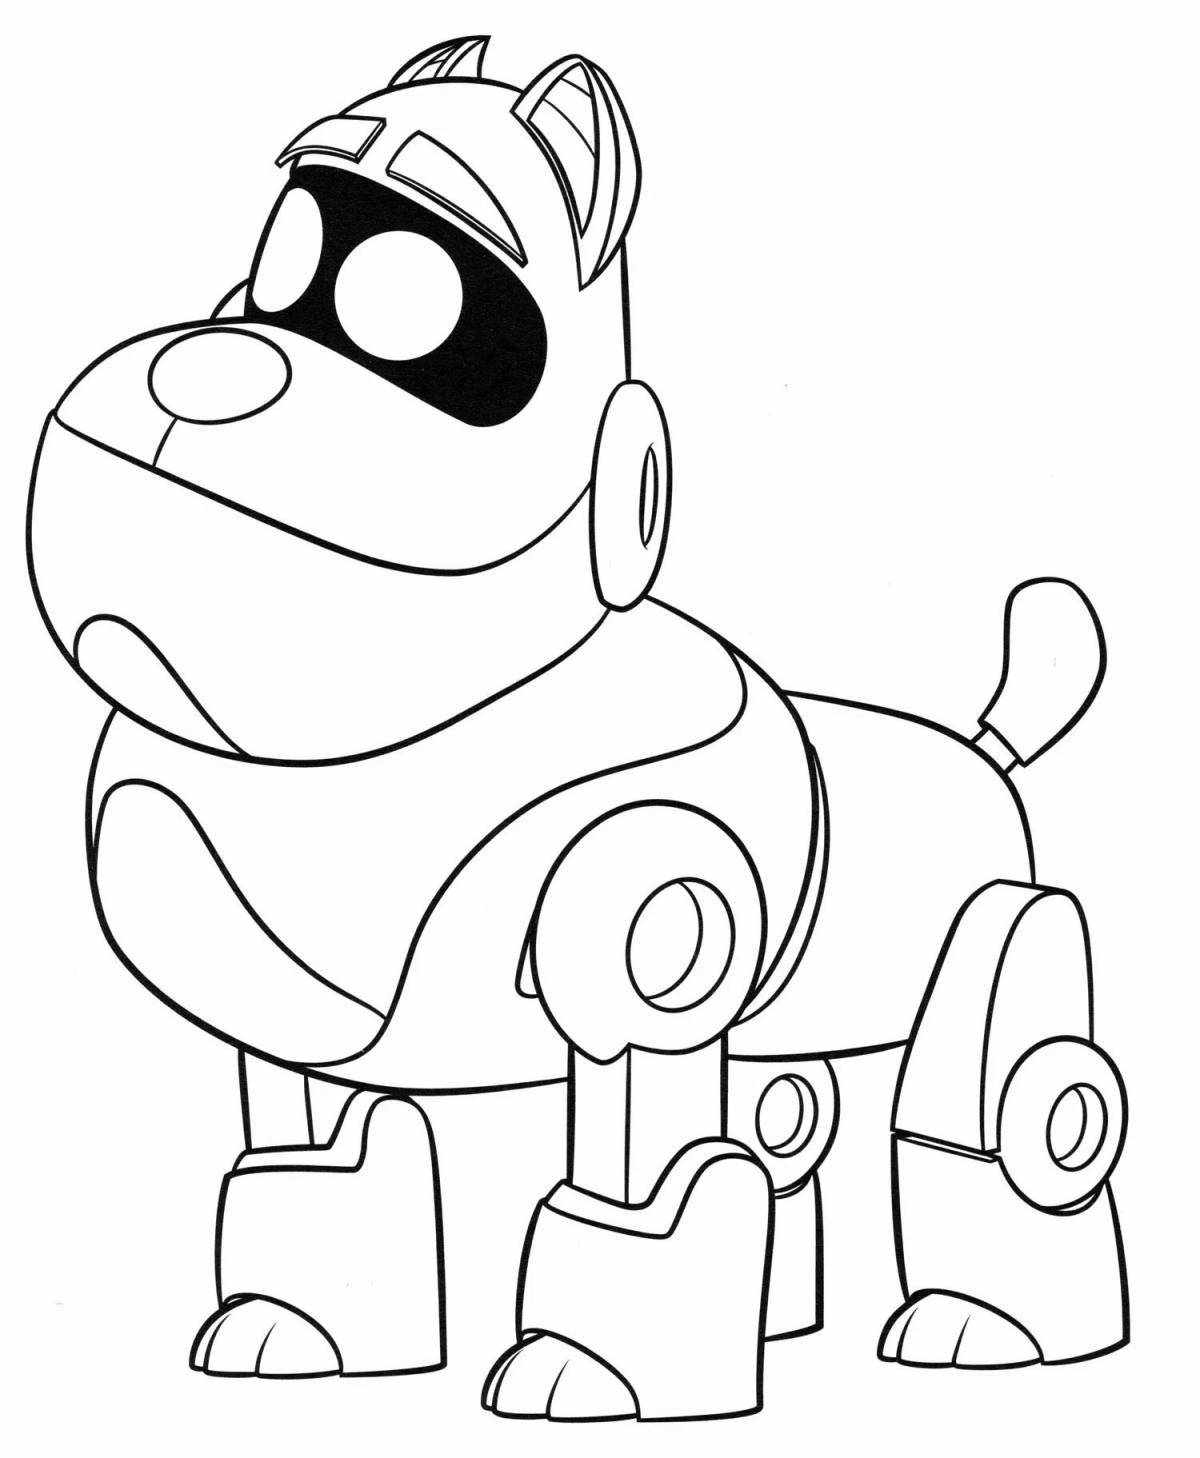 Fun robot dog coloring page